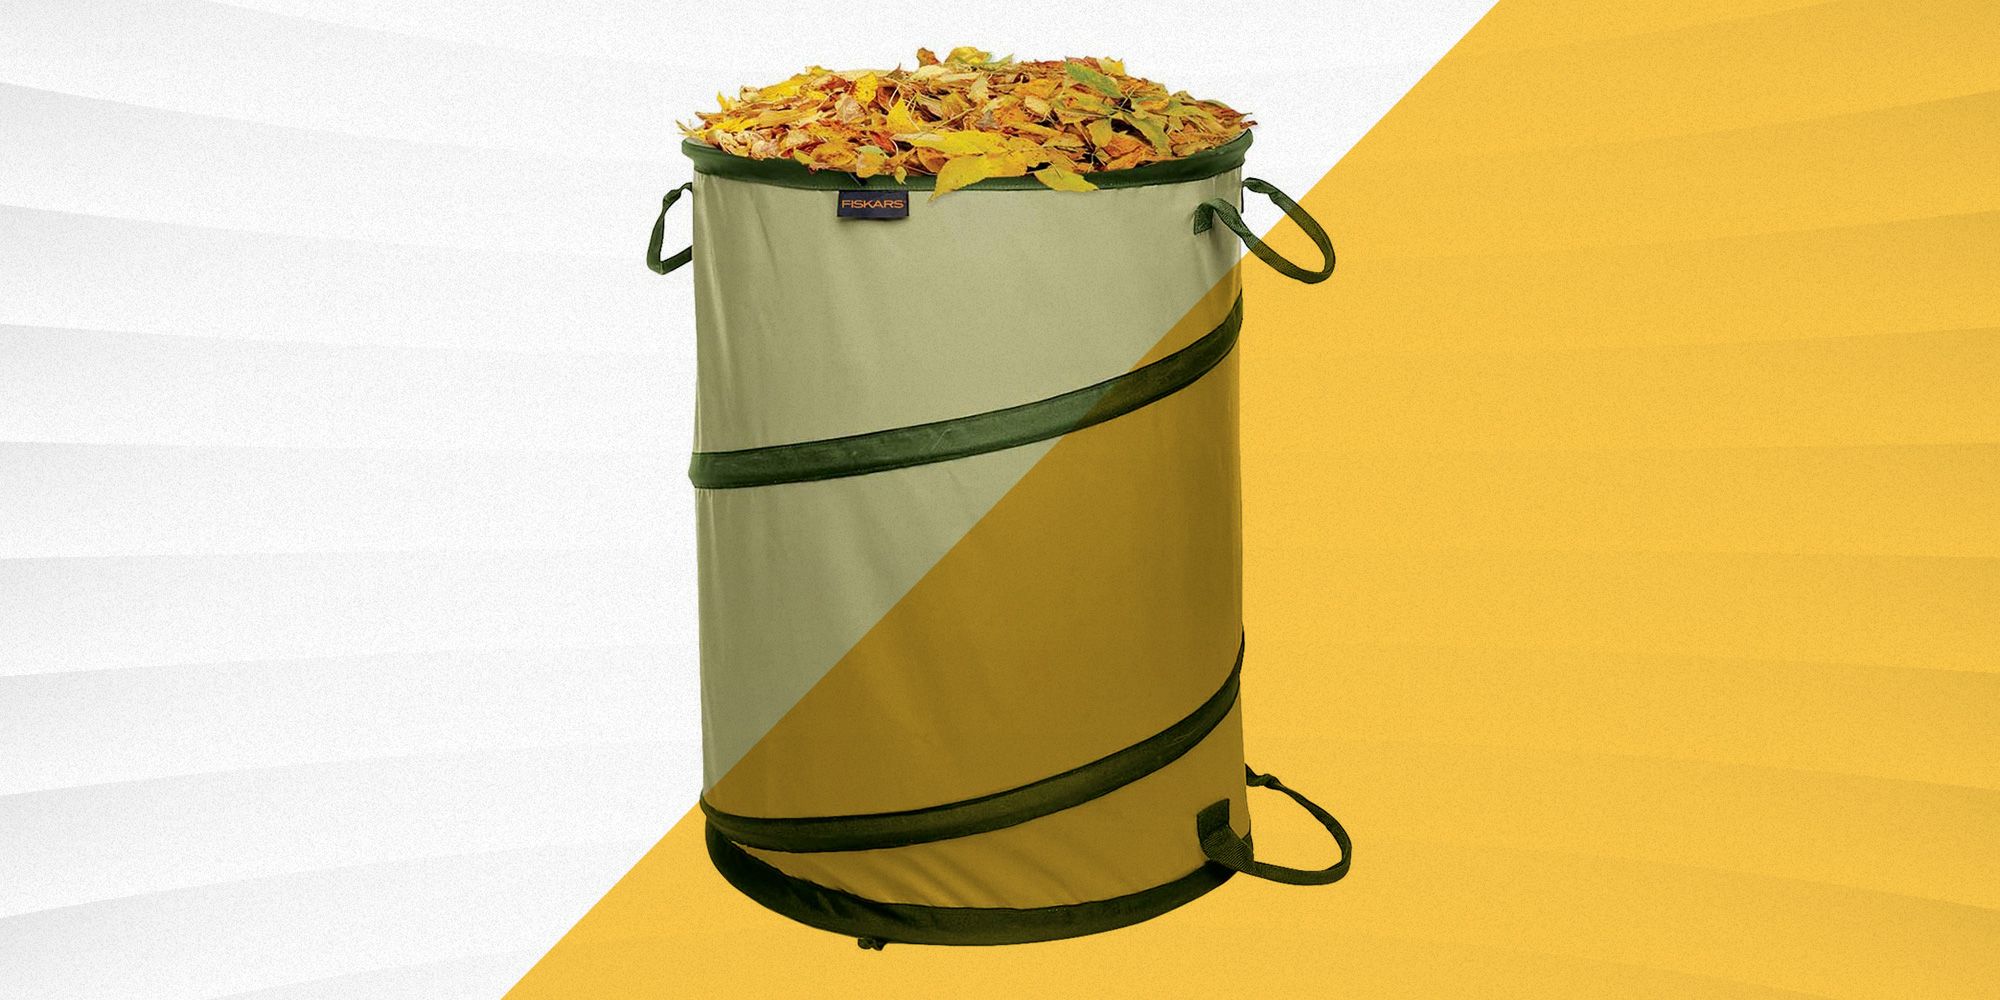 Bag of waste garbage garden garden bag sturdy reusable leaf herbs 